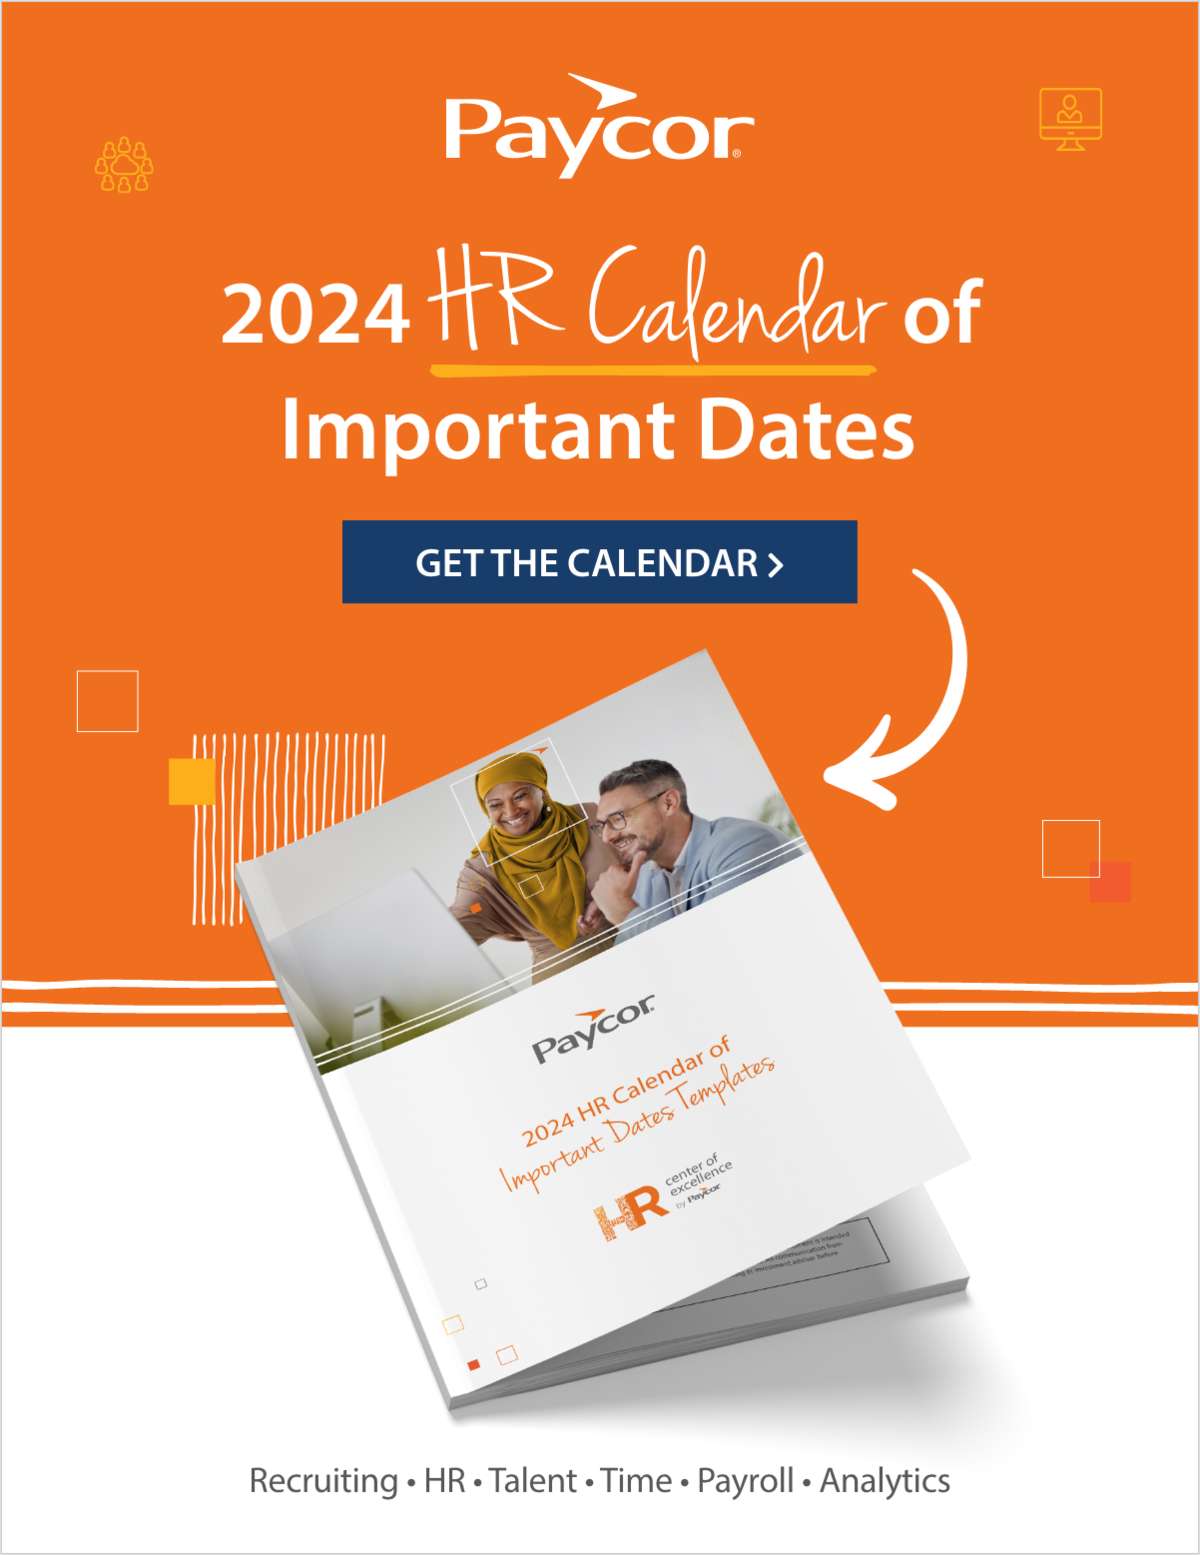 2024 HR Calendar of Important Dates, Free Paycor, Inc. Calendar